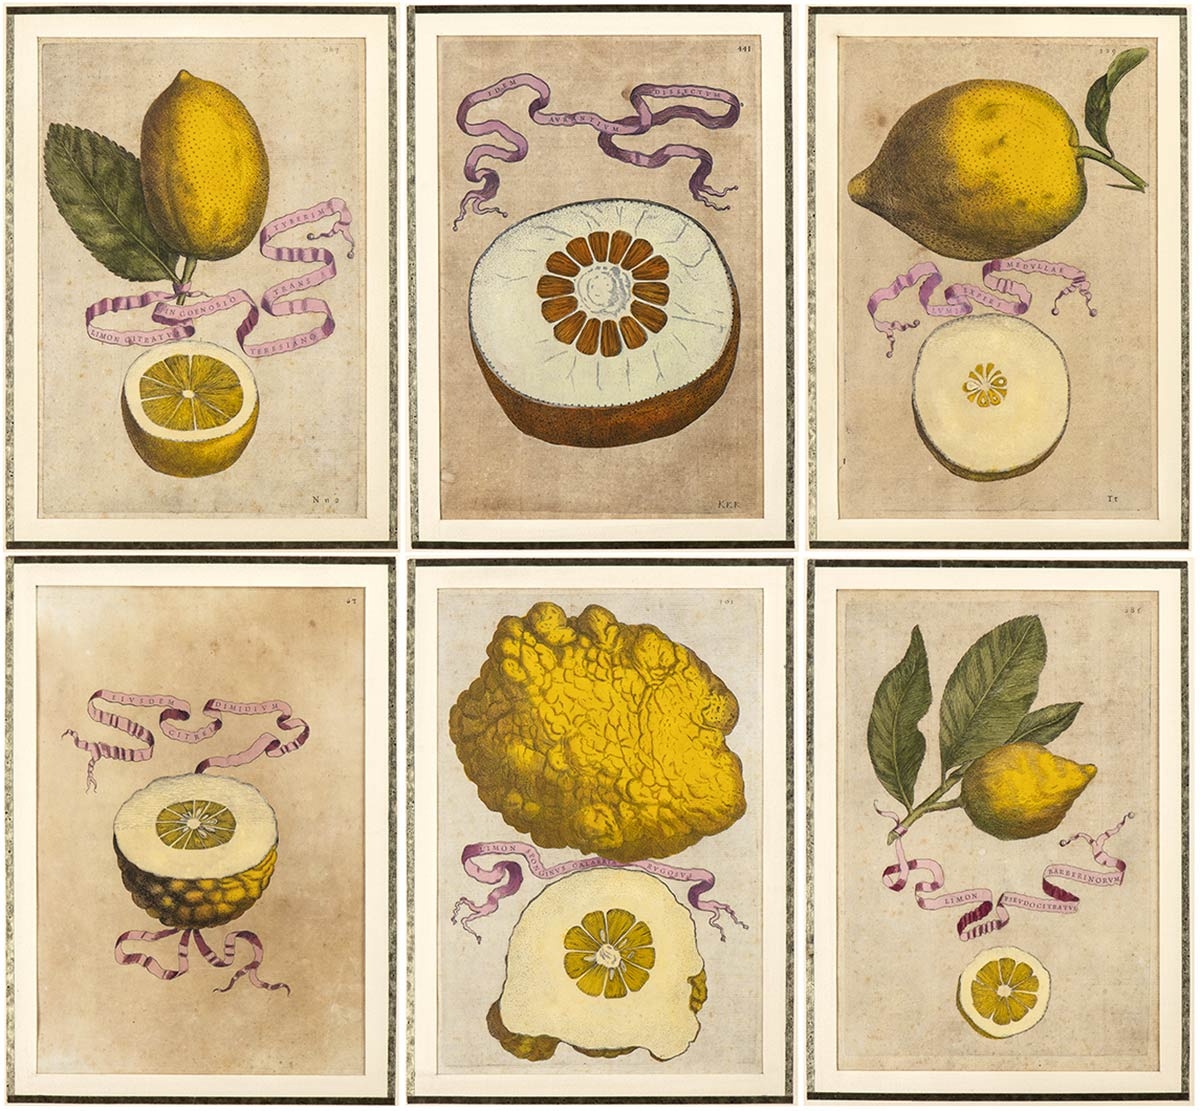 Artwork by Giovanni Battista Ferrari, "Hesperides Sive de Malorum Aureorum Cultura et Usu Libras Quatuor" with lemon studies, Made of Engravings on watermarked paper